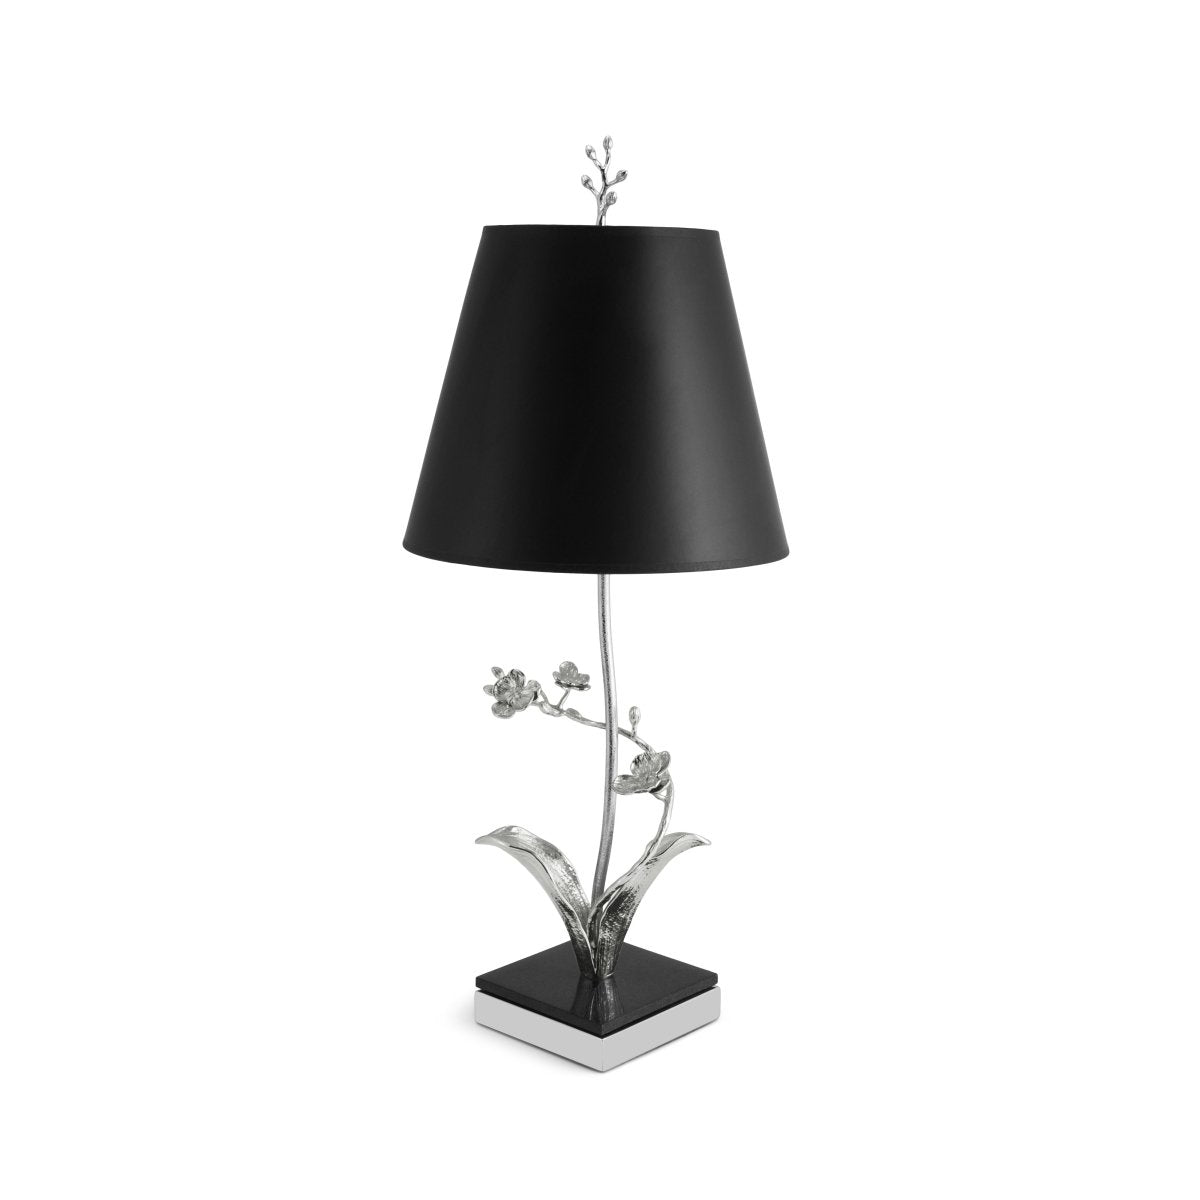 Michael Aram White Orchid Table Lamp